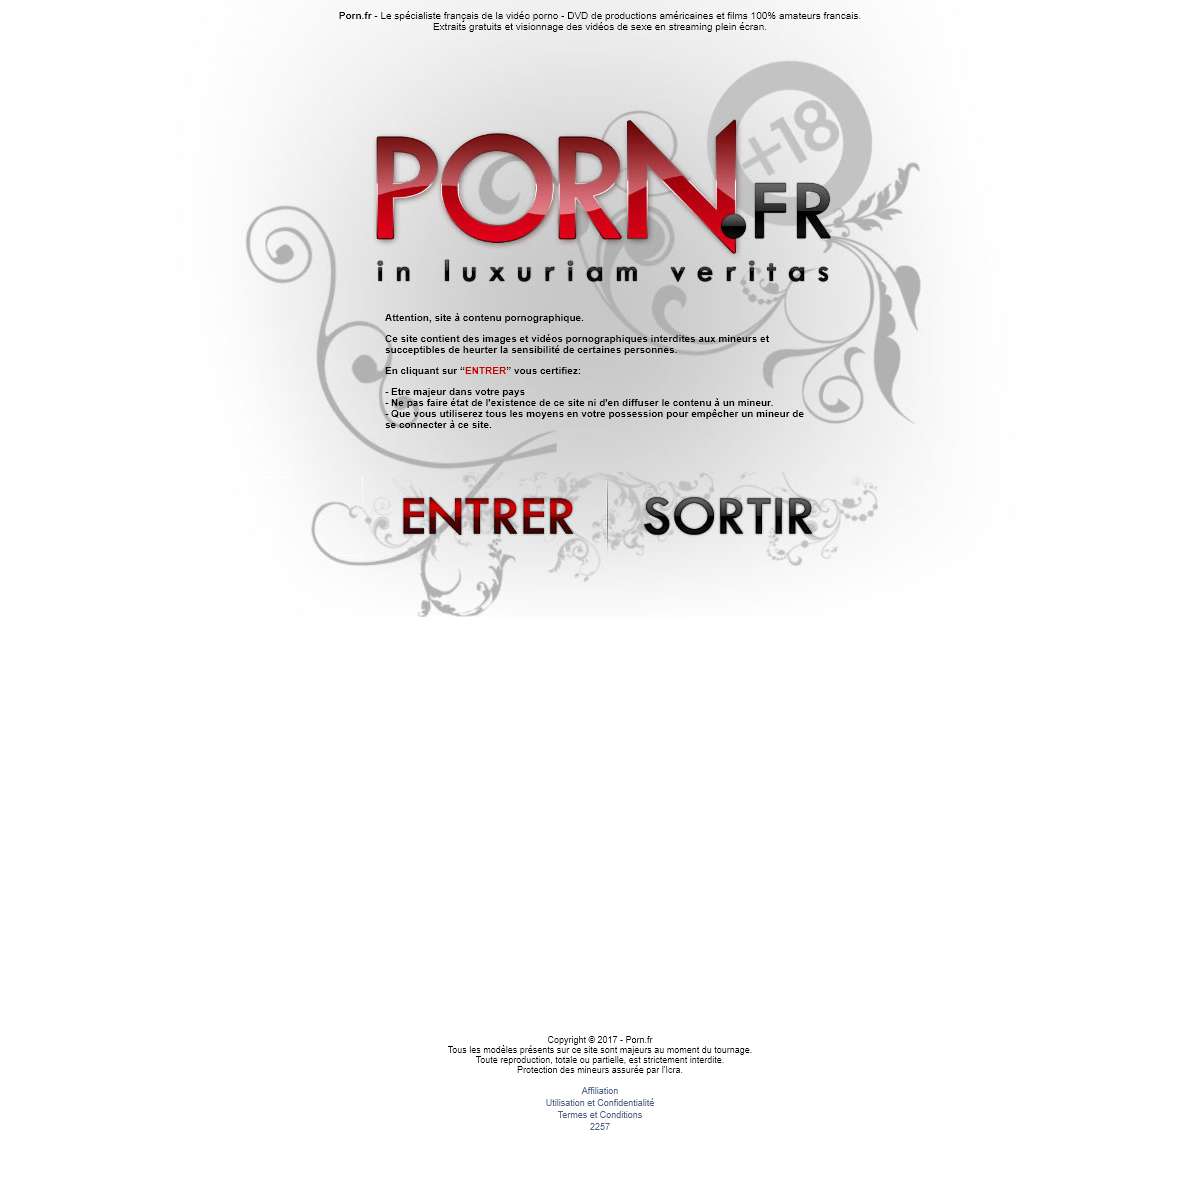 A complete backup of www.porn.fr